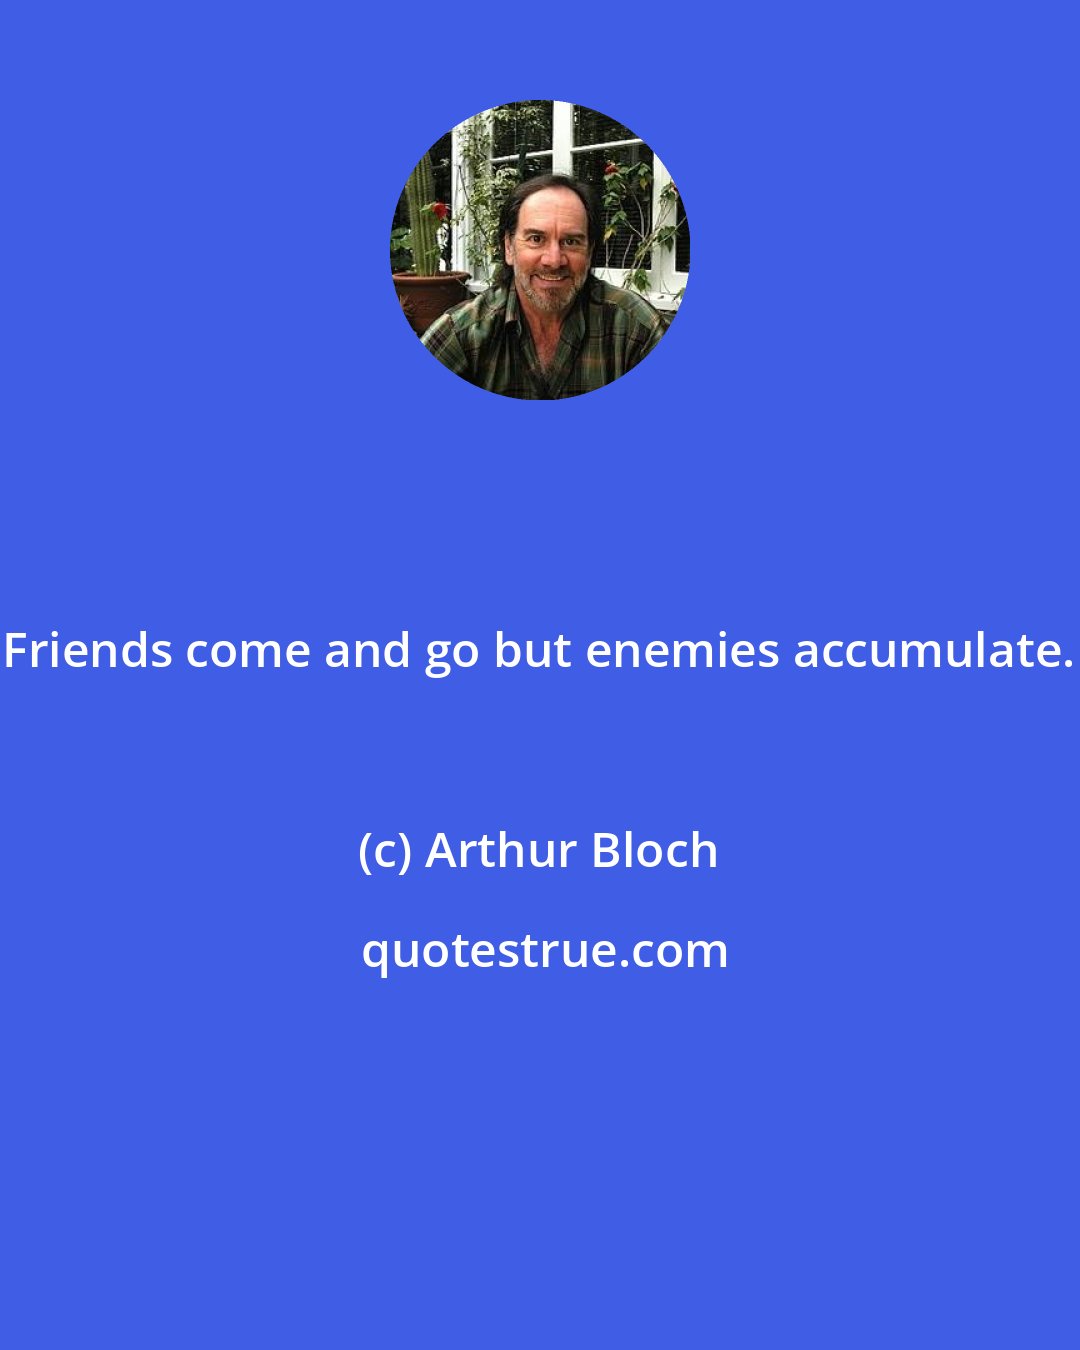 Arthur Bloch: Friends come and go but enemies accumulate.